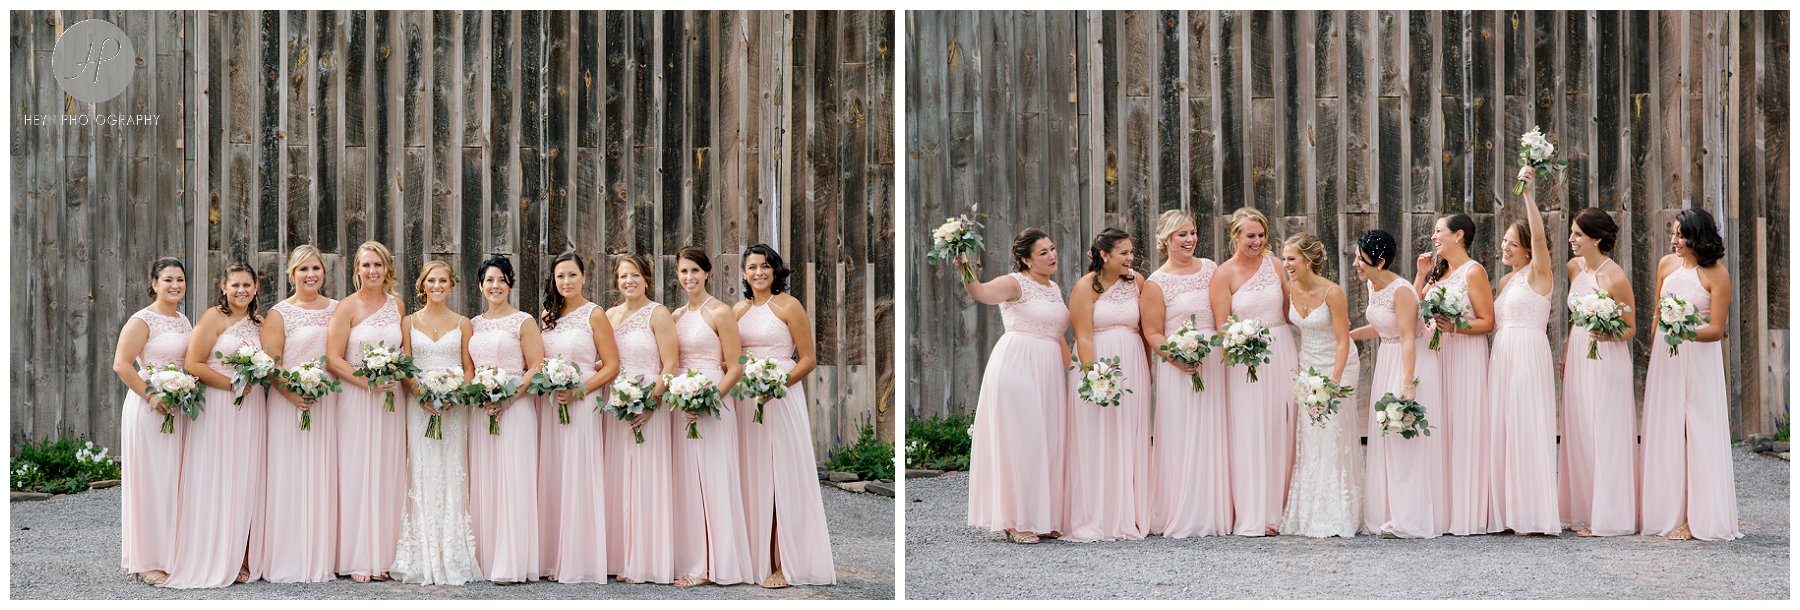 bridesmaids by barn at stone tavern farm wedding in the catskills new york